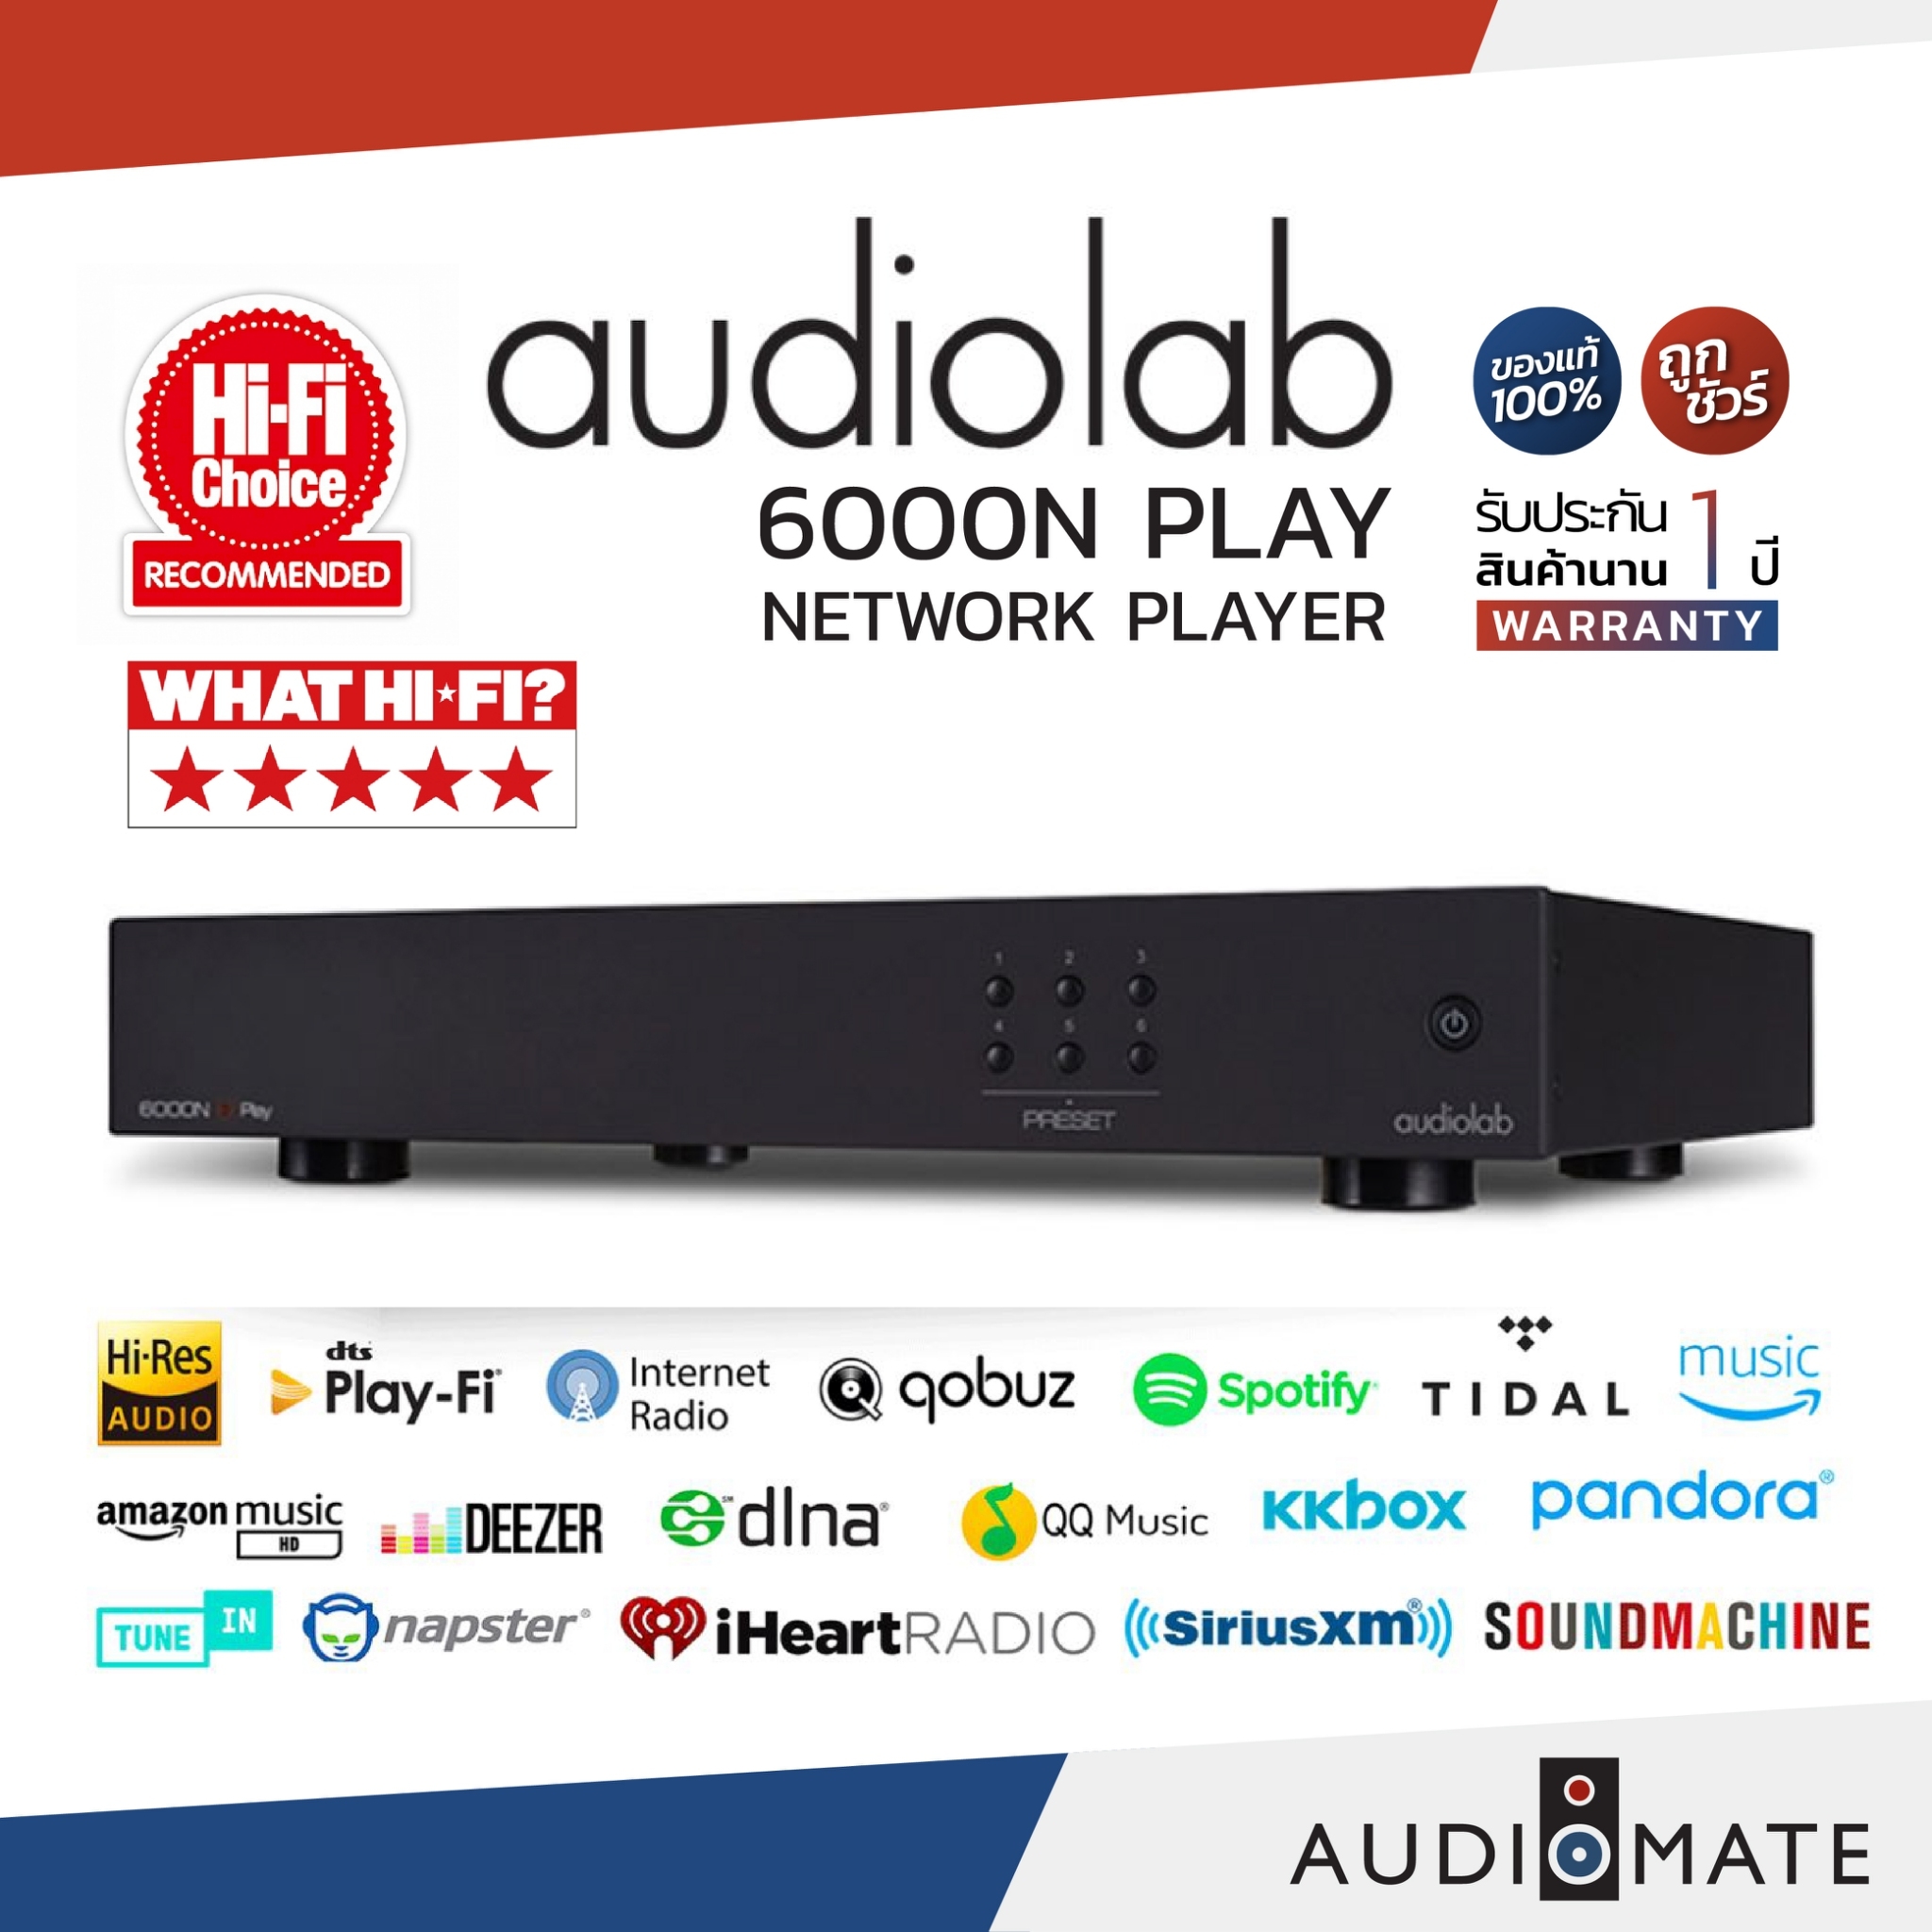 AUDIOLAB 6000N Play Network-Player / เครื่อง Stream เพลง High Resolution / รับประกัน 1 ปี โดย บริษัท Hifi Tower / AUDIOMATE